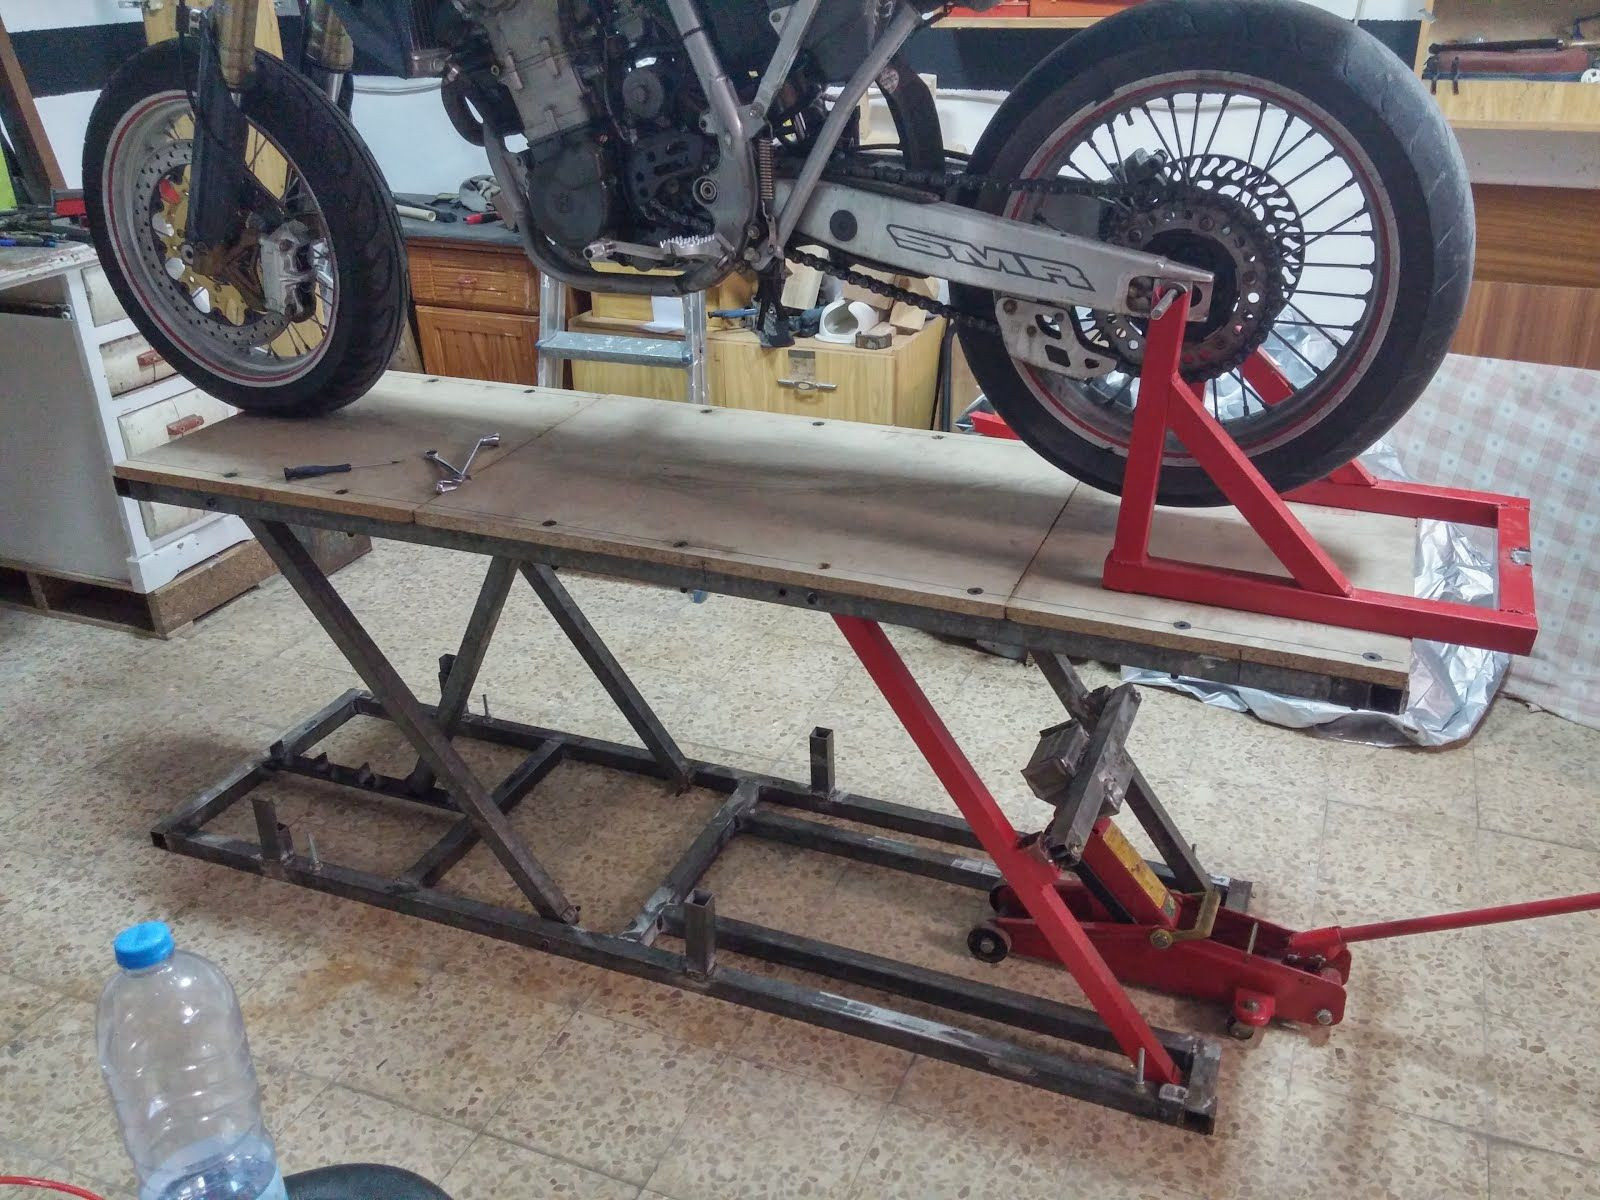 DIY Motorcycle Lift Plans
 Homemade bike lift